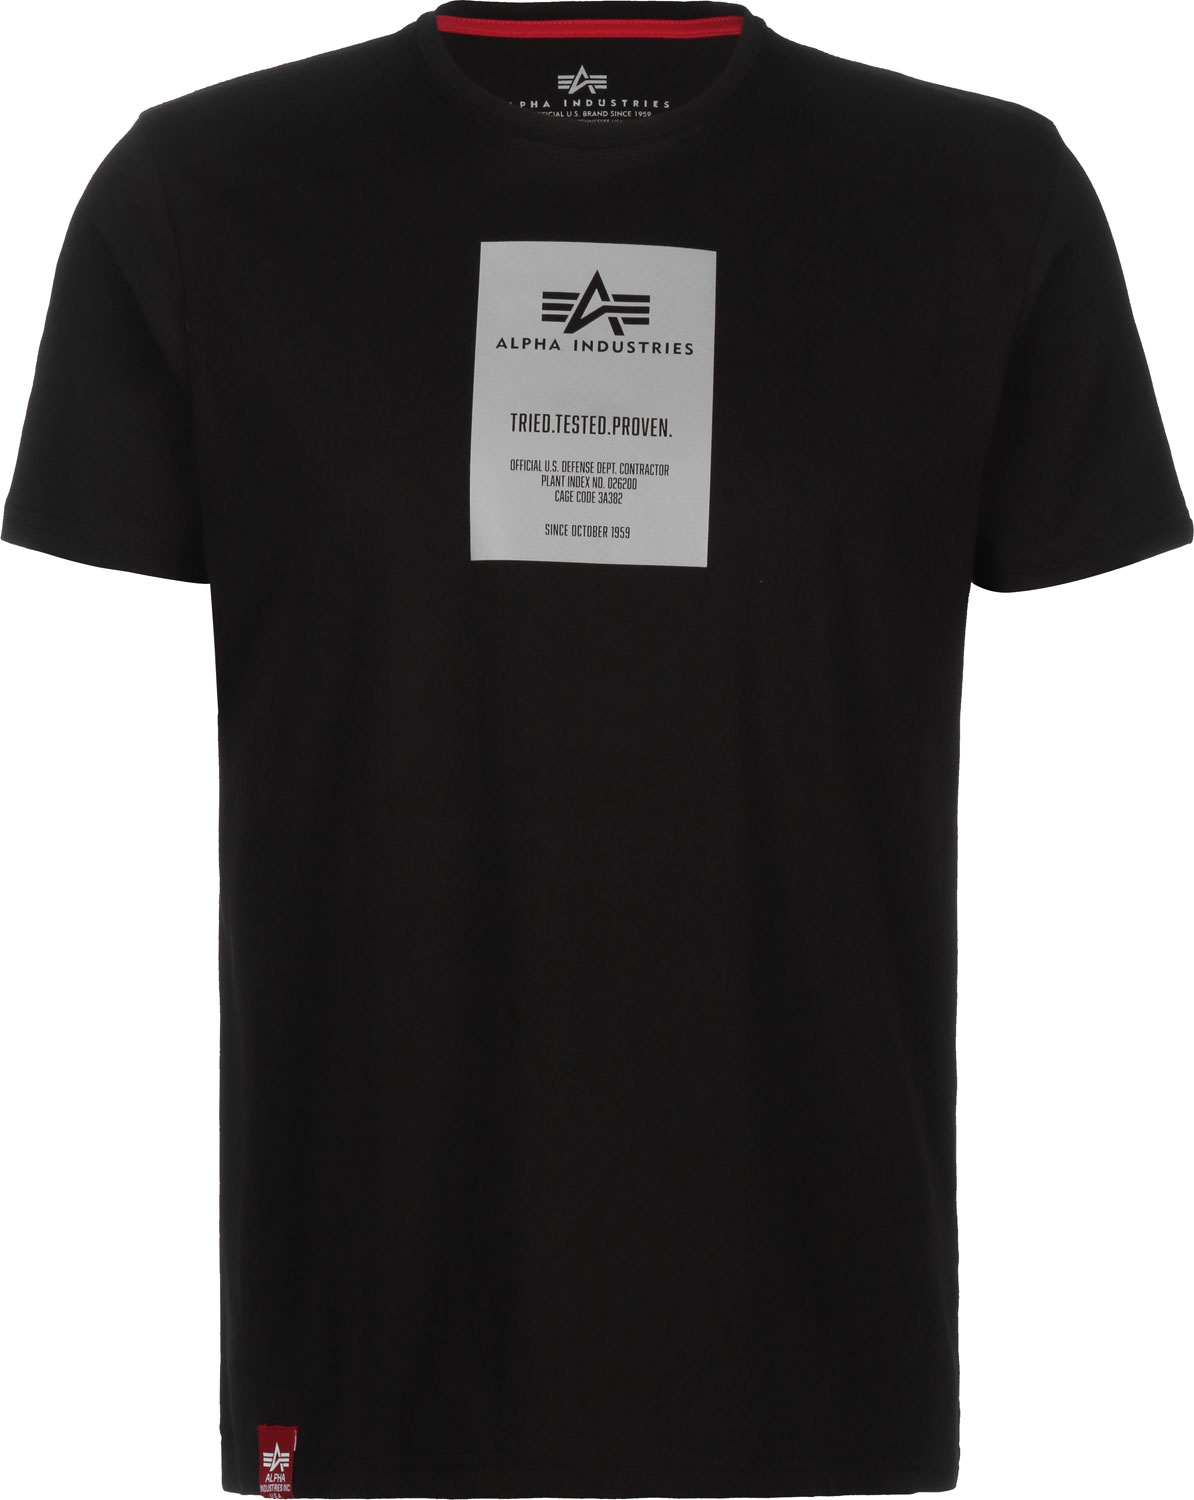 Alpha Industries Reflective Label T-Shirt - Black (126515/09) - The 515